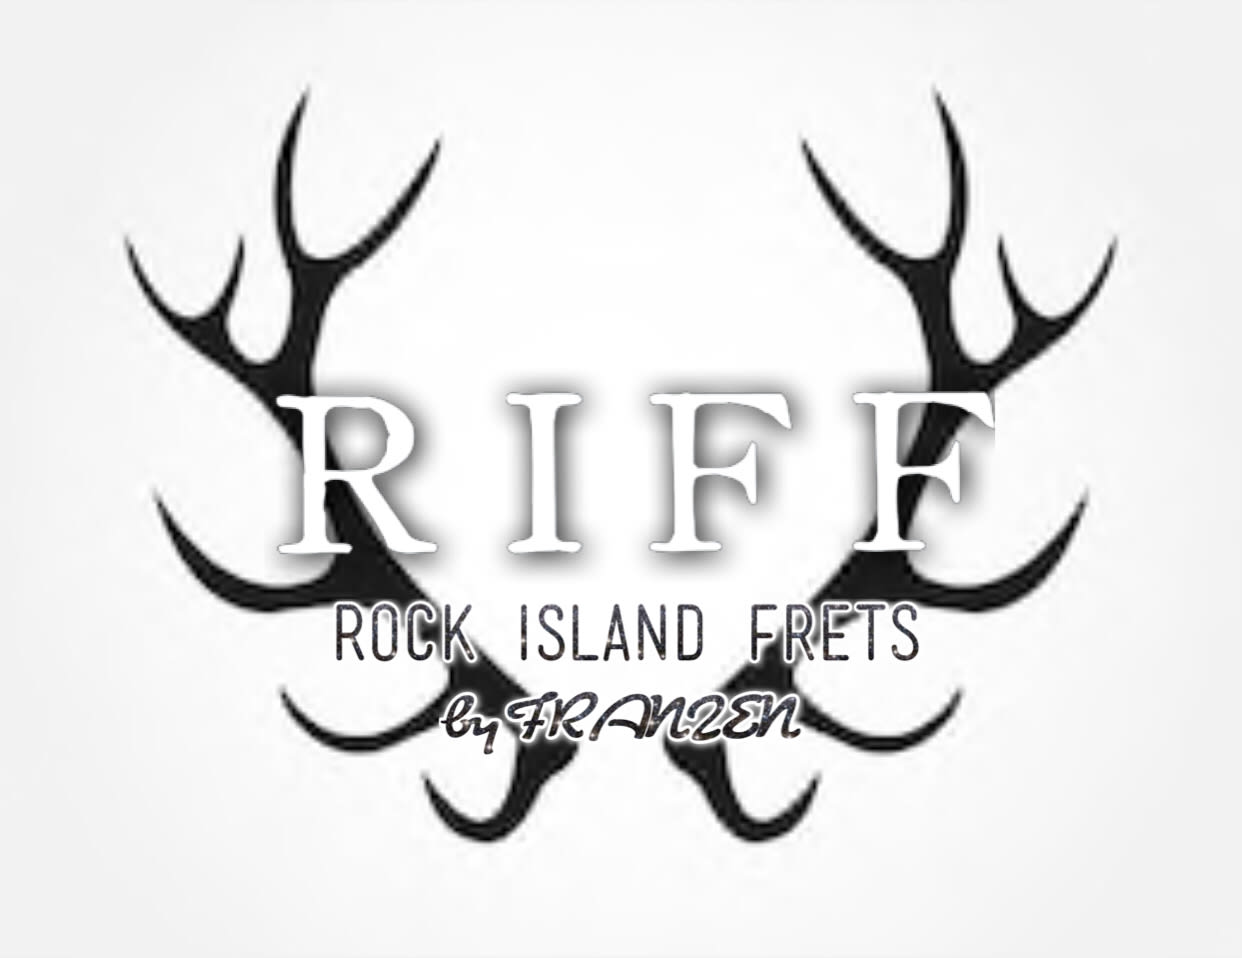 Rock Island Frets